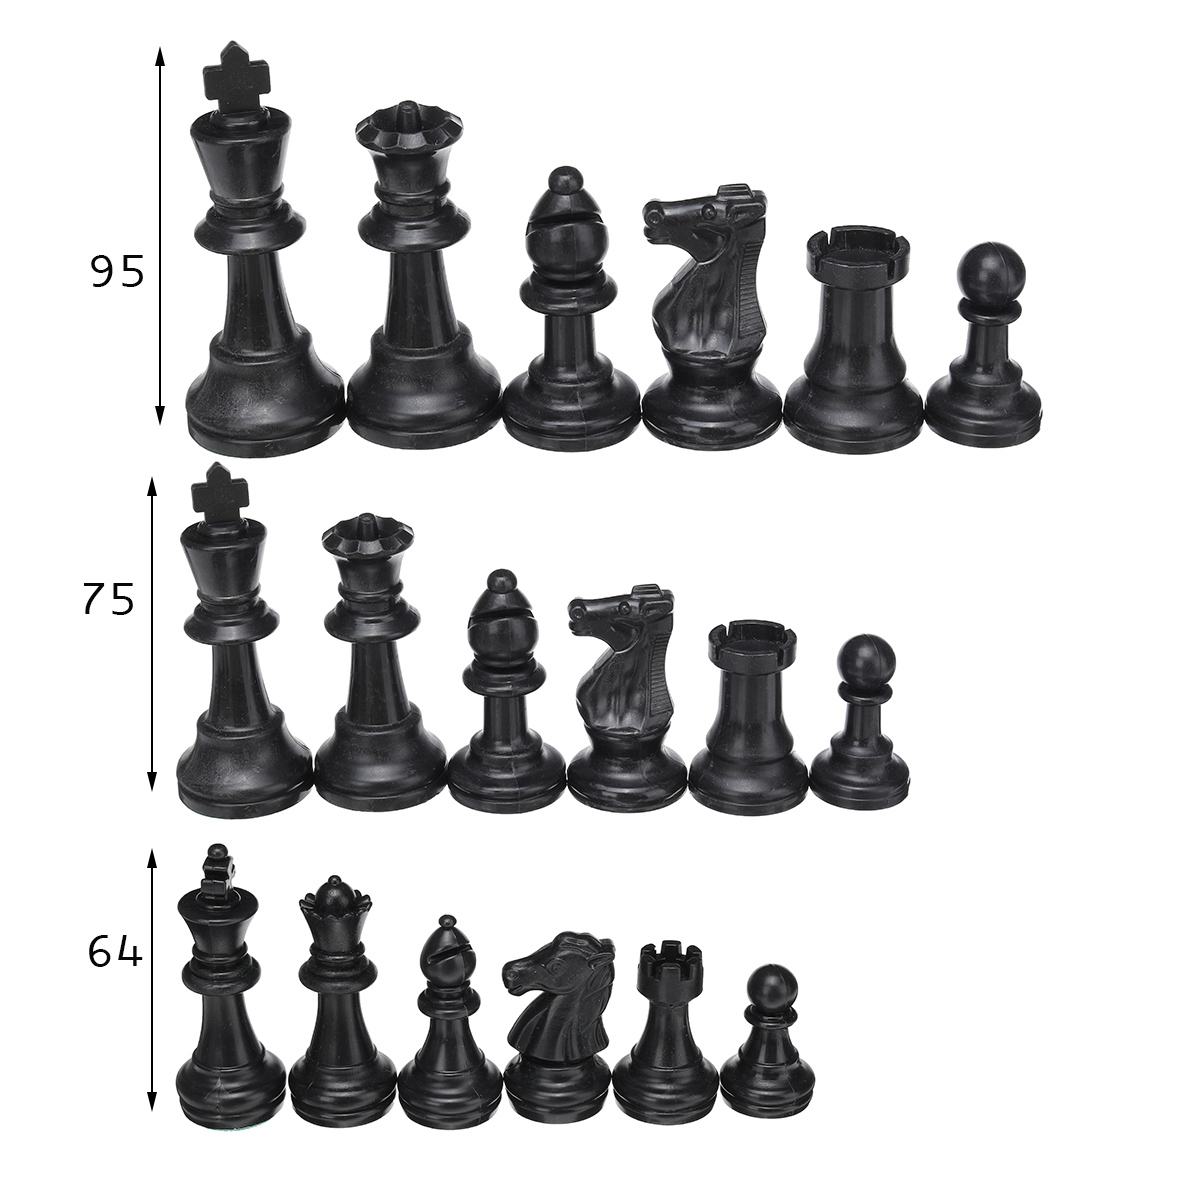 32pcs/set Chess Pieces Plastic King Chessmen Kids Entertainment Games OO 